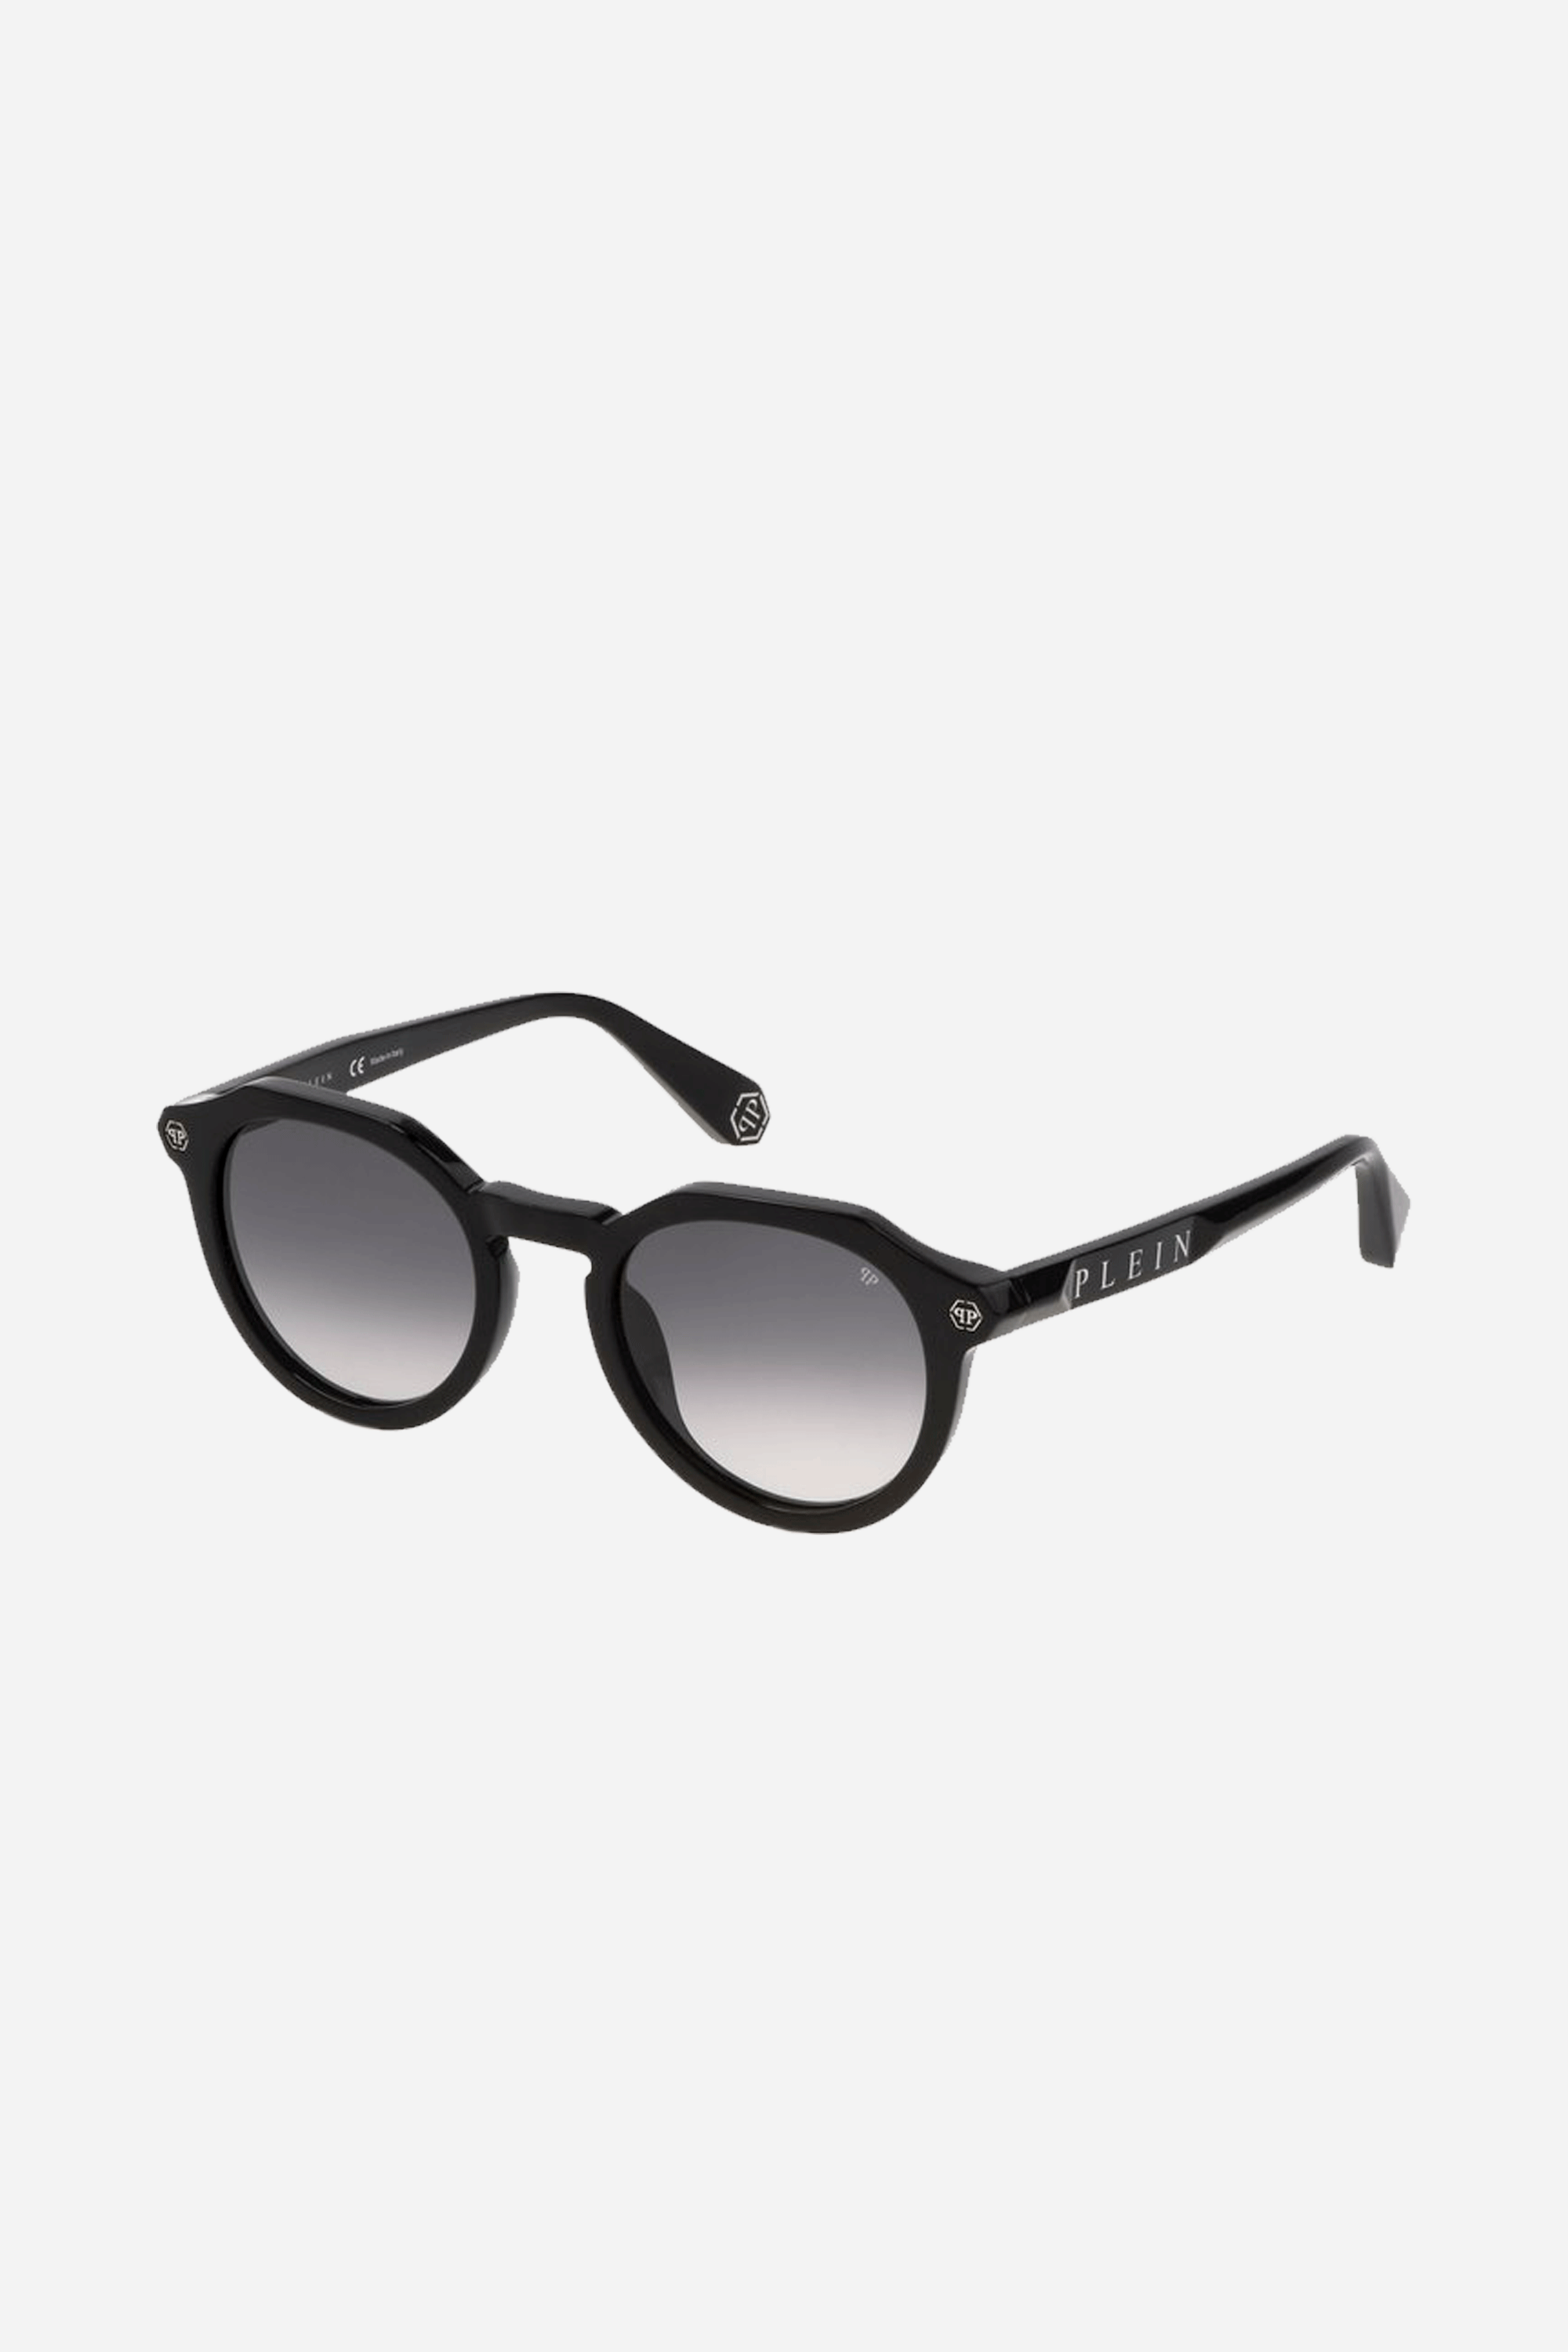 Philipp Plein round black sunglasses - Eyewear Club